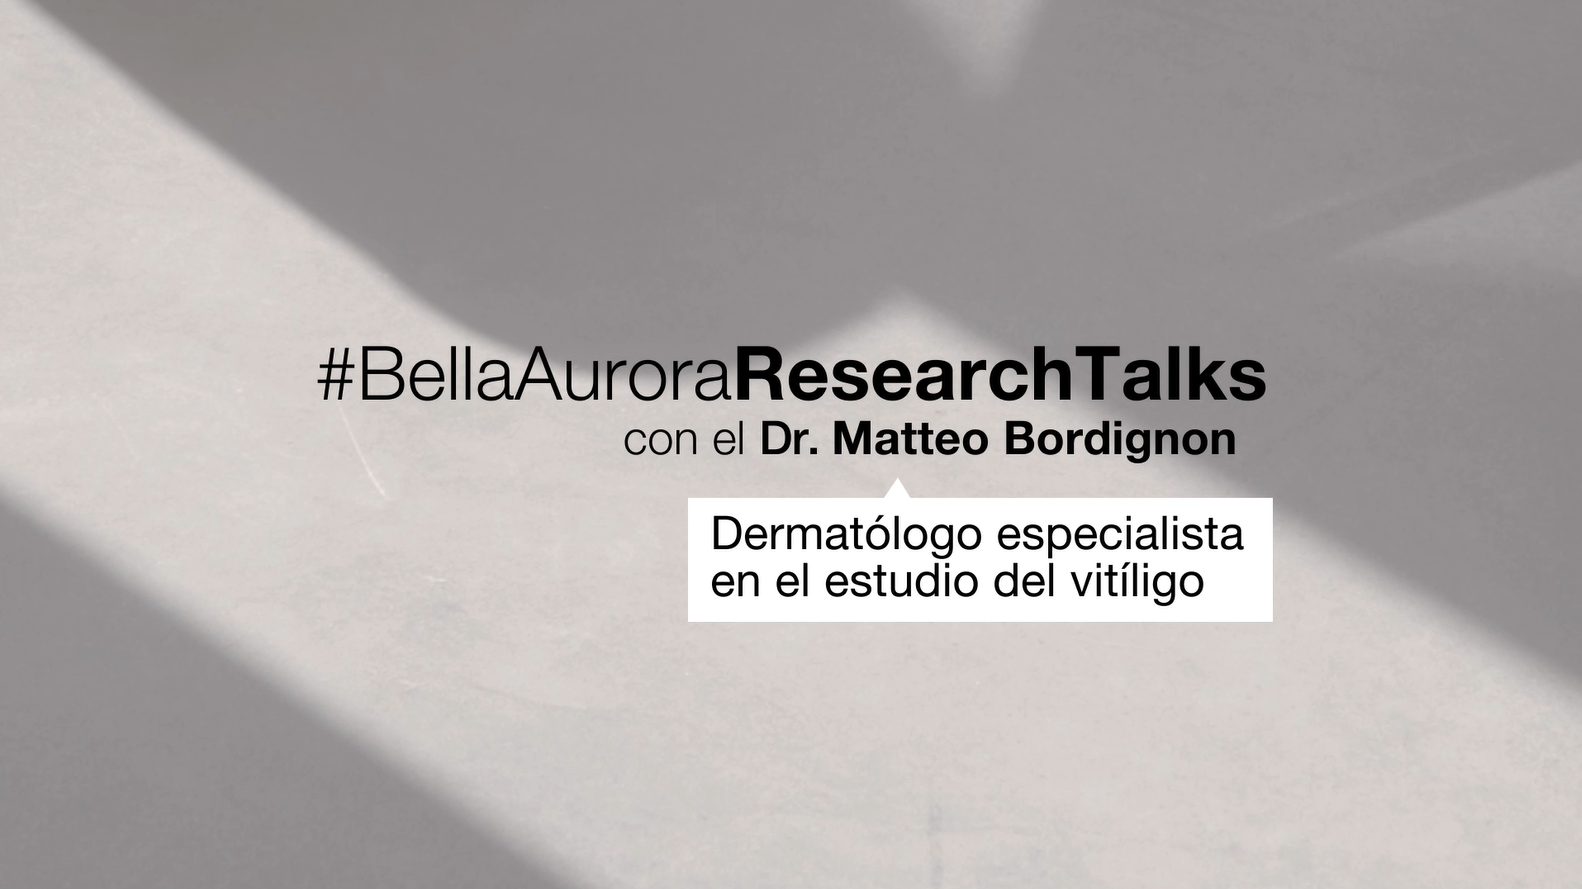 #BellaAuroraResearchTalks con el Dr. Matteo Bordignon